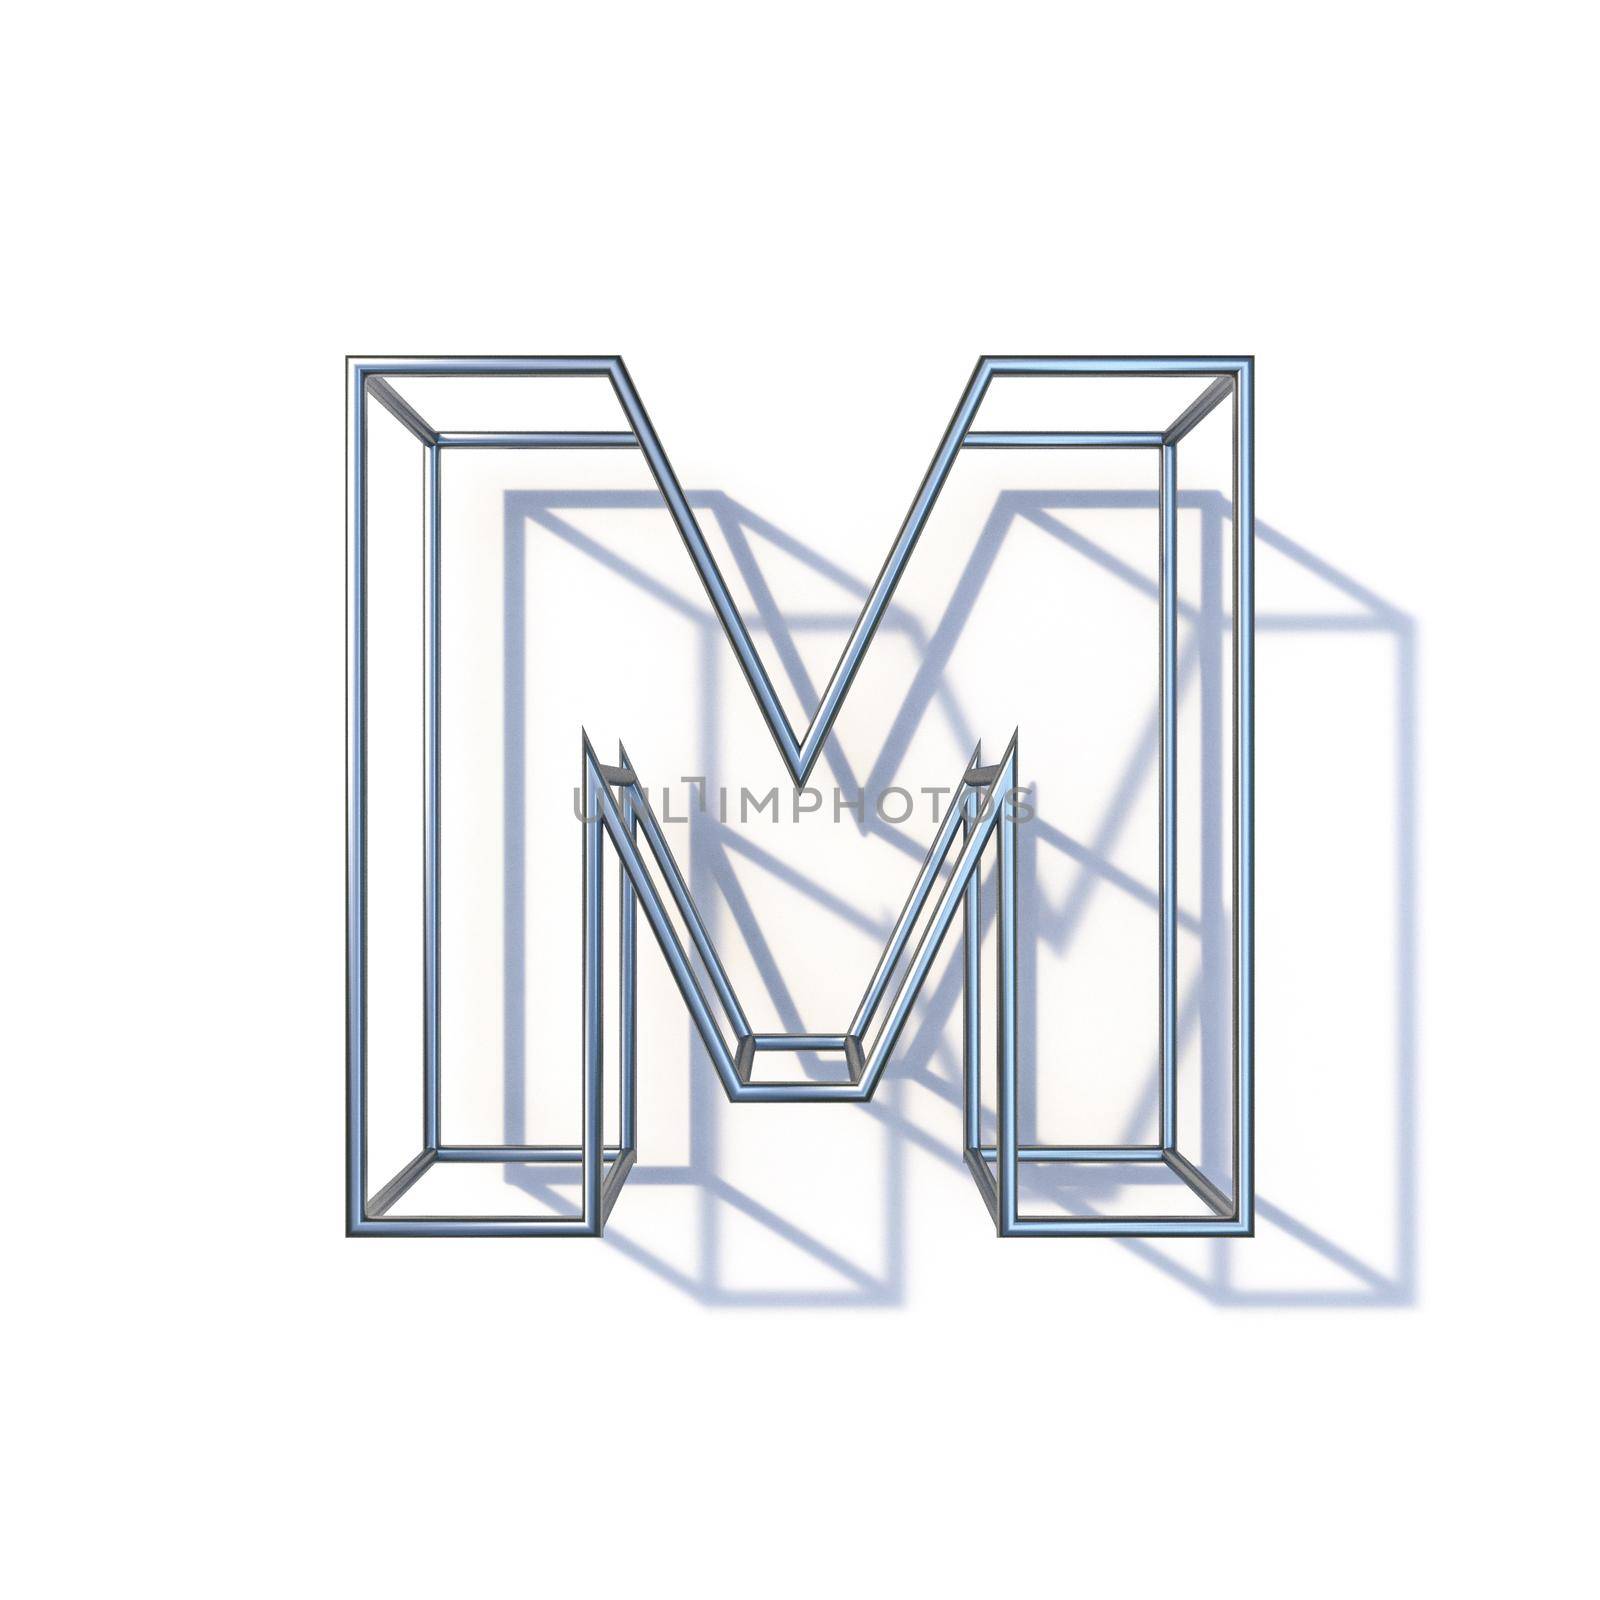 Steel wire frame font Letter M 3D render illustration isolated on white background